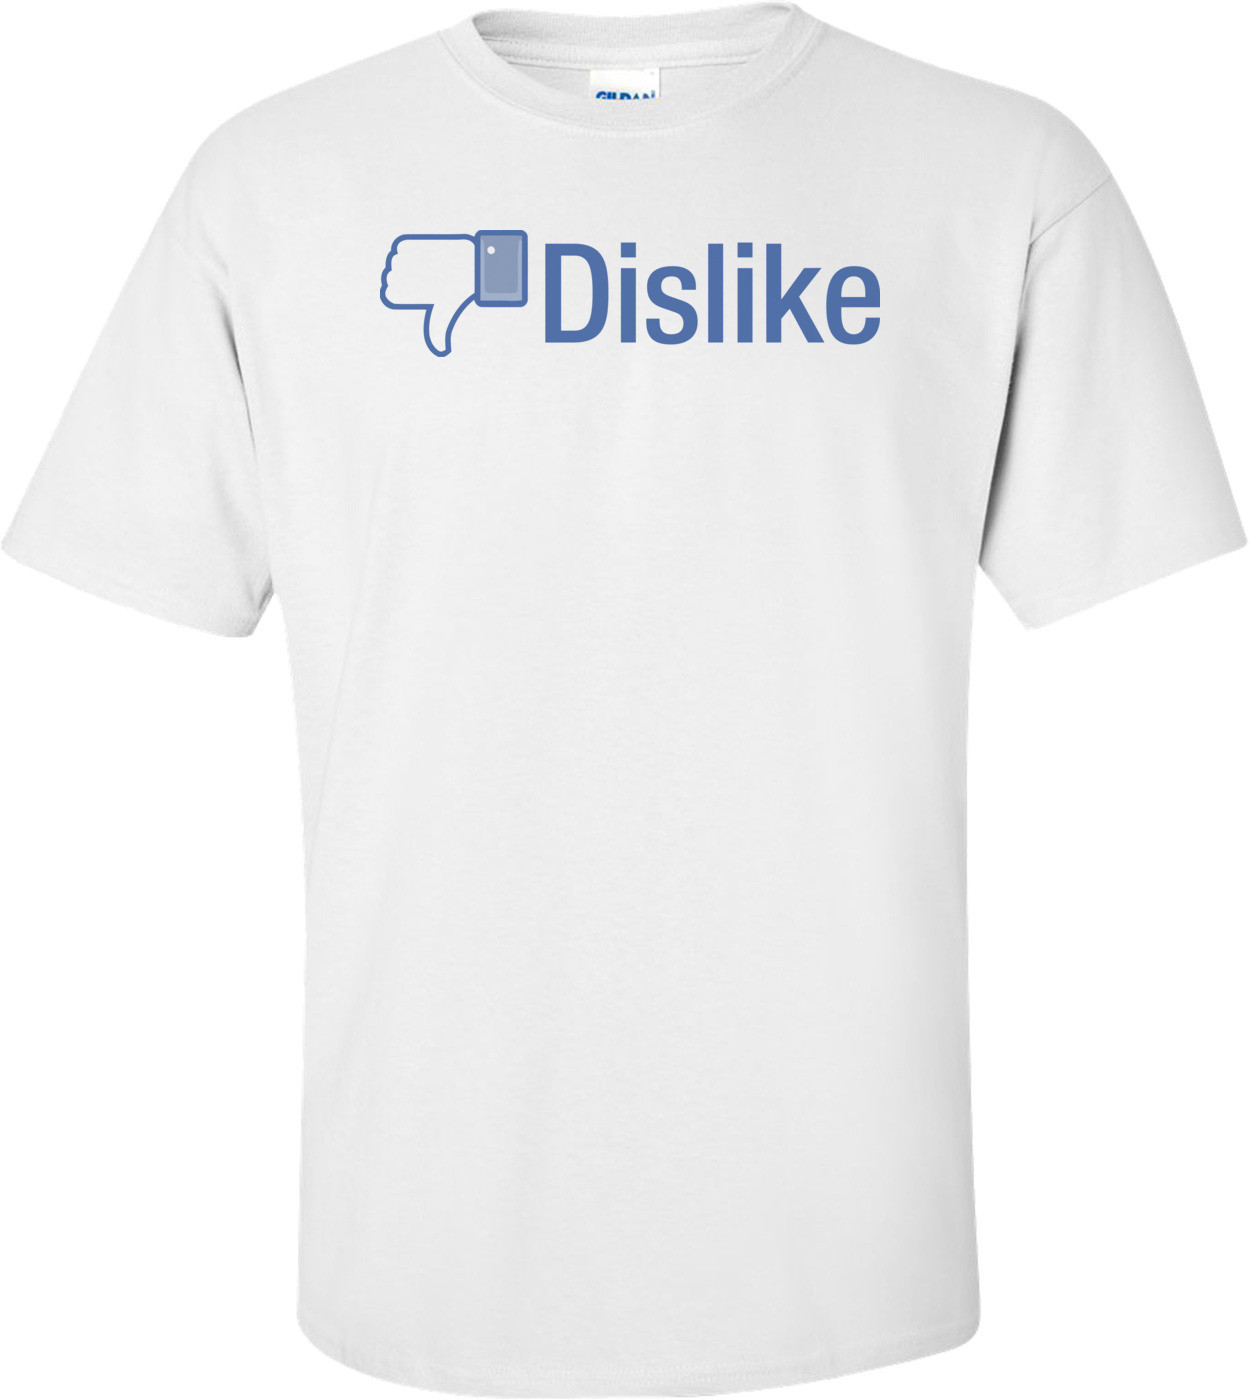 Dislike - Facebook